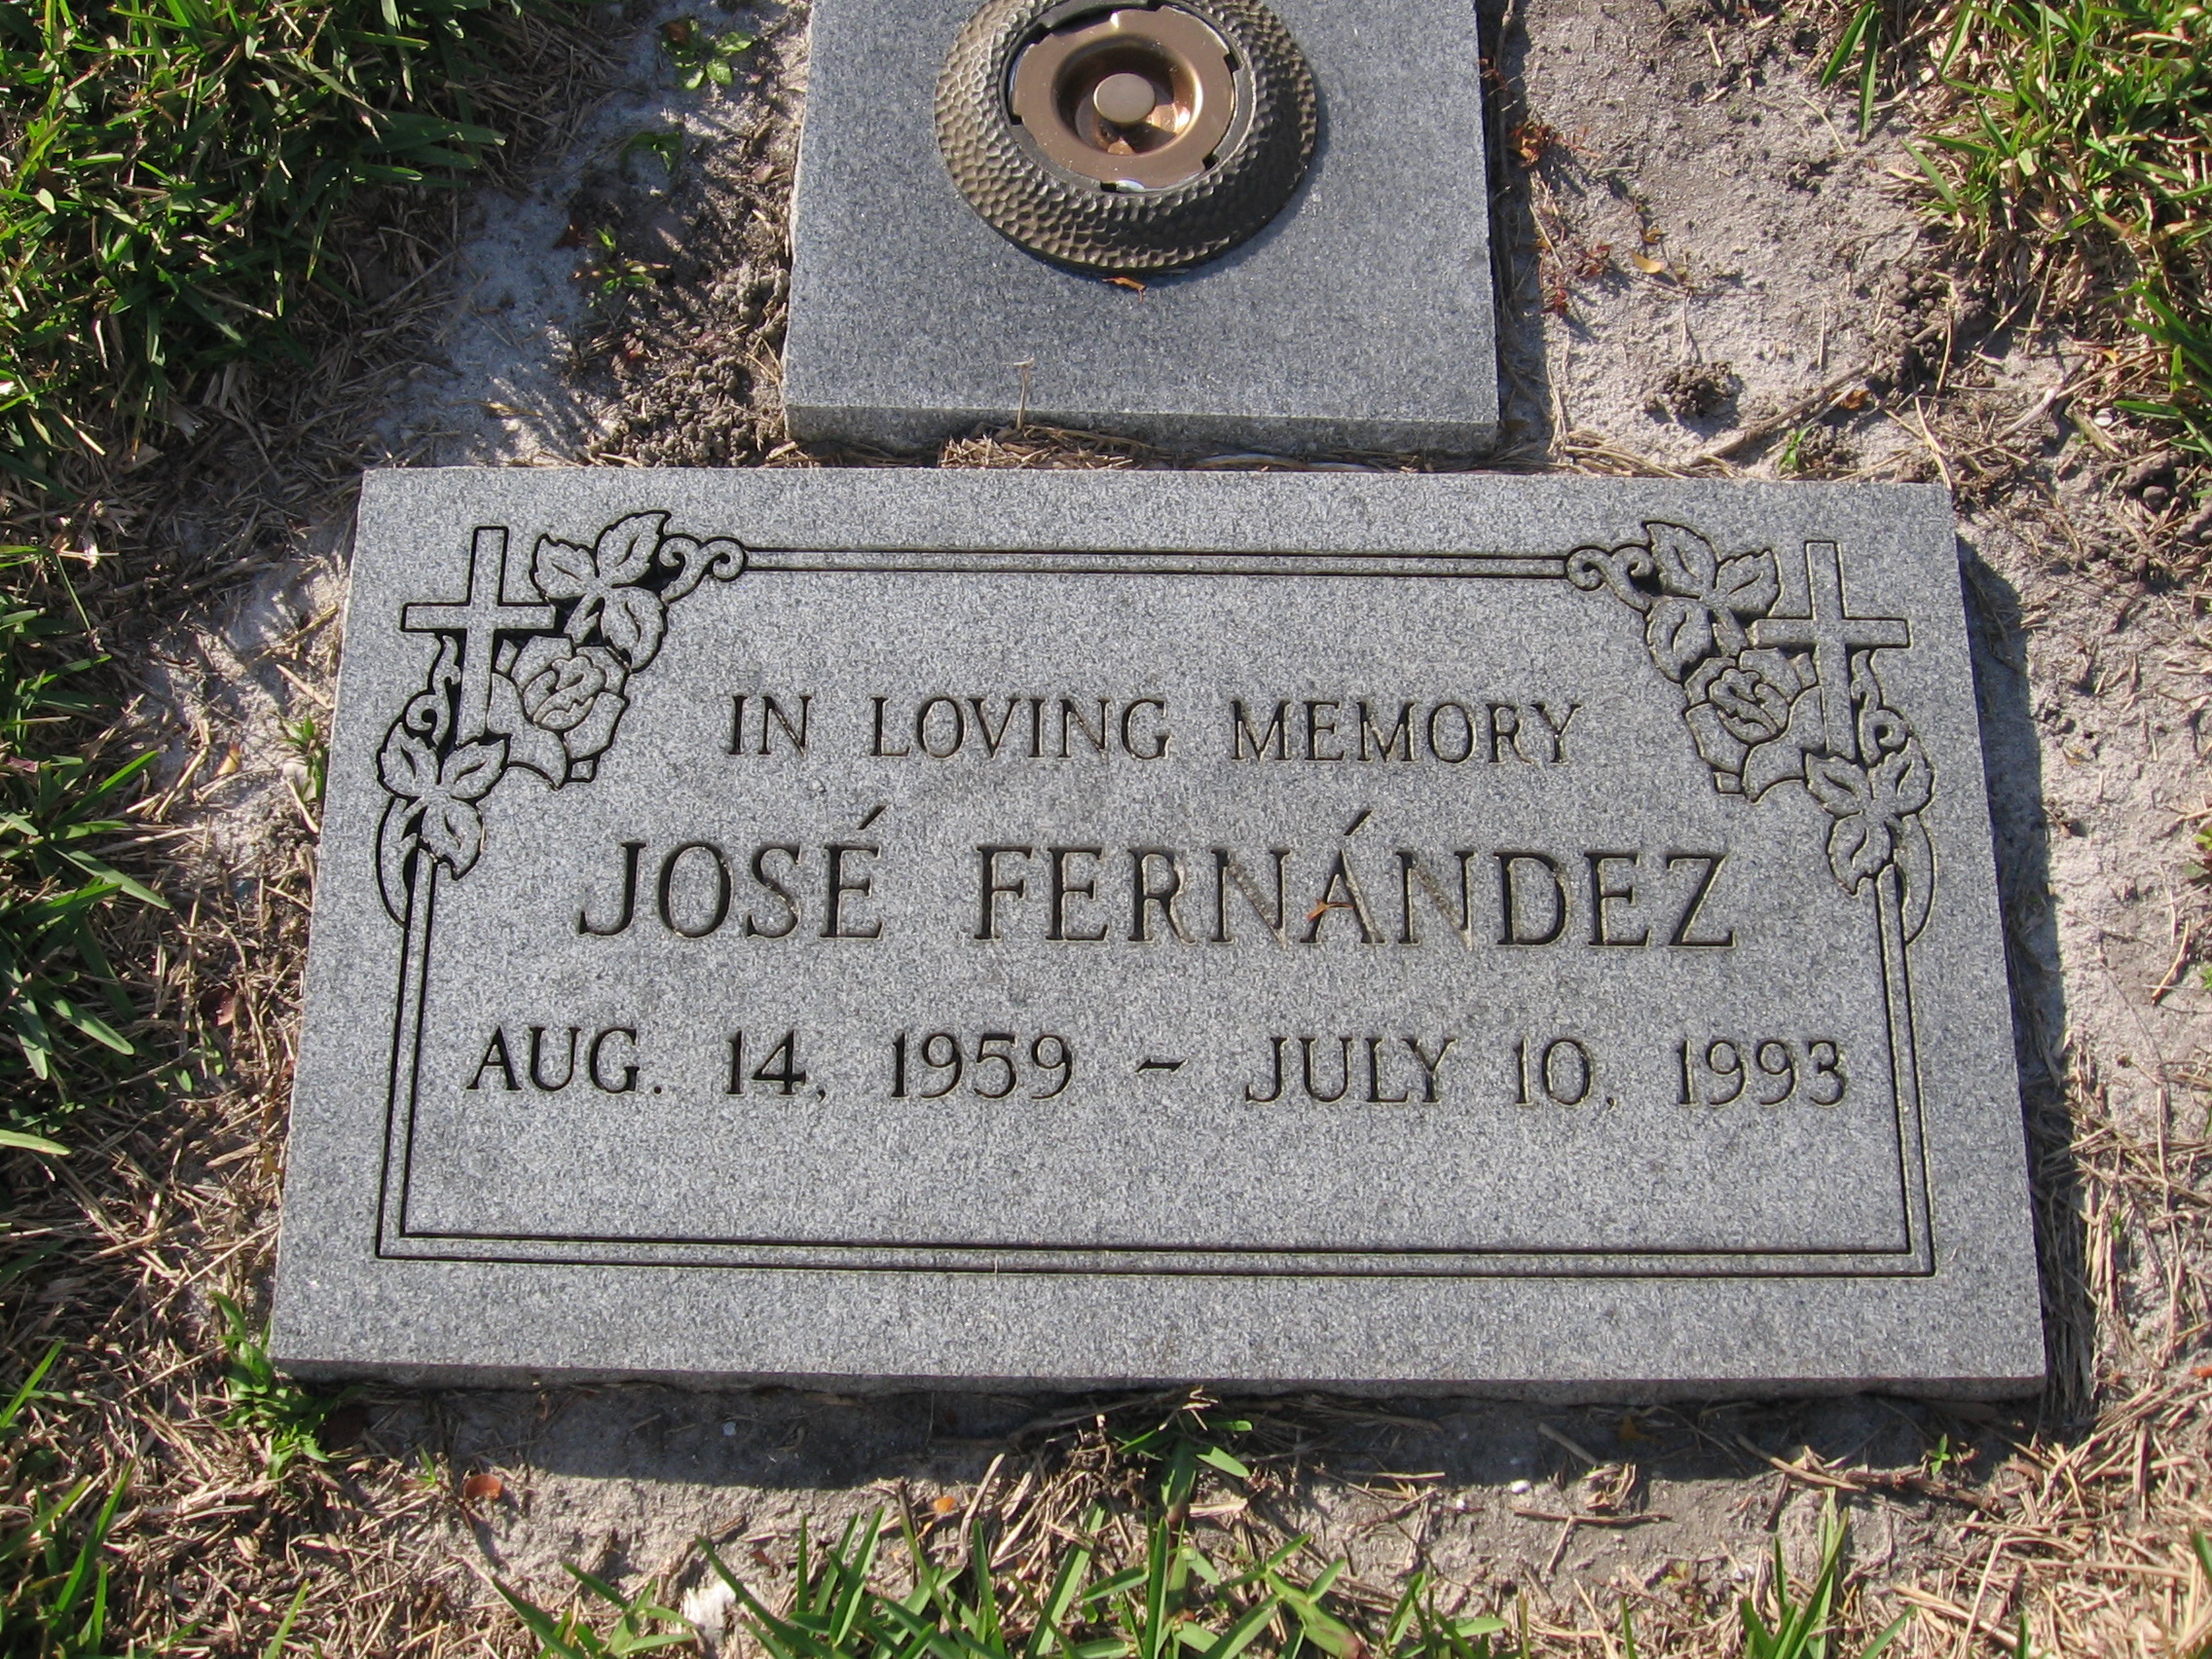 Jose Fernandez